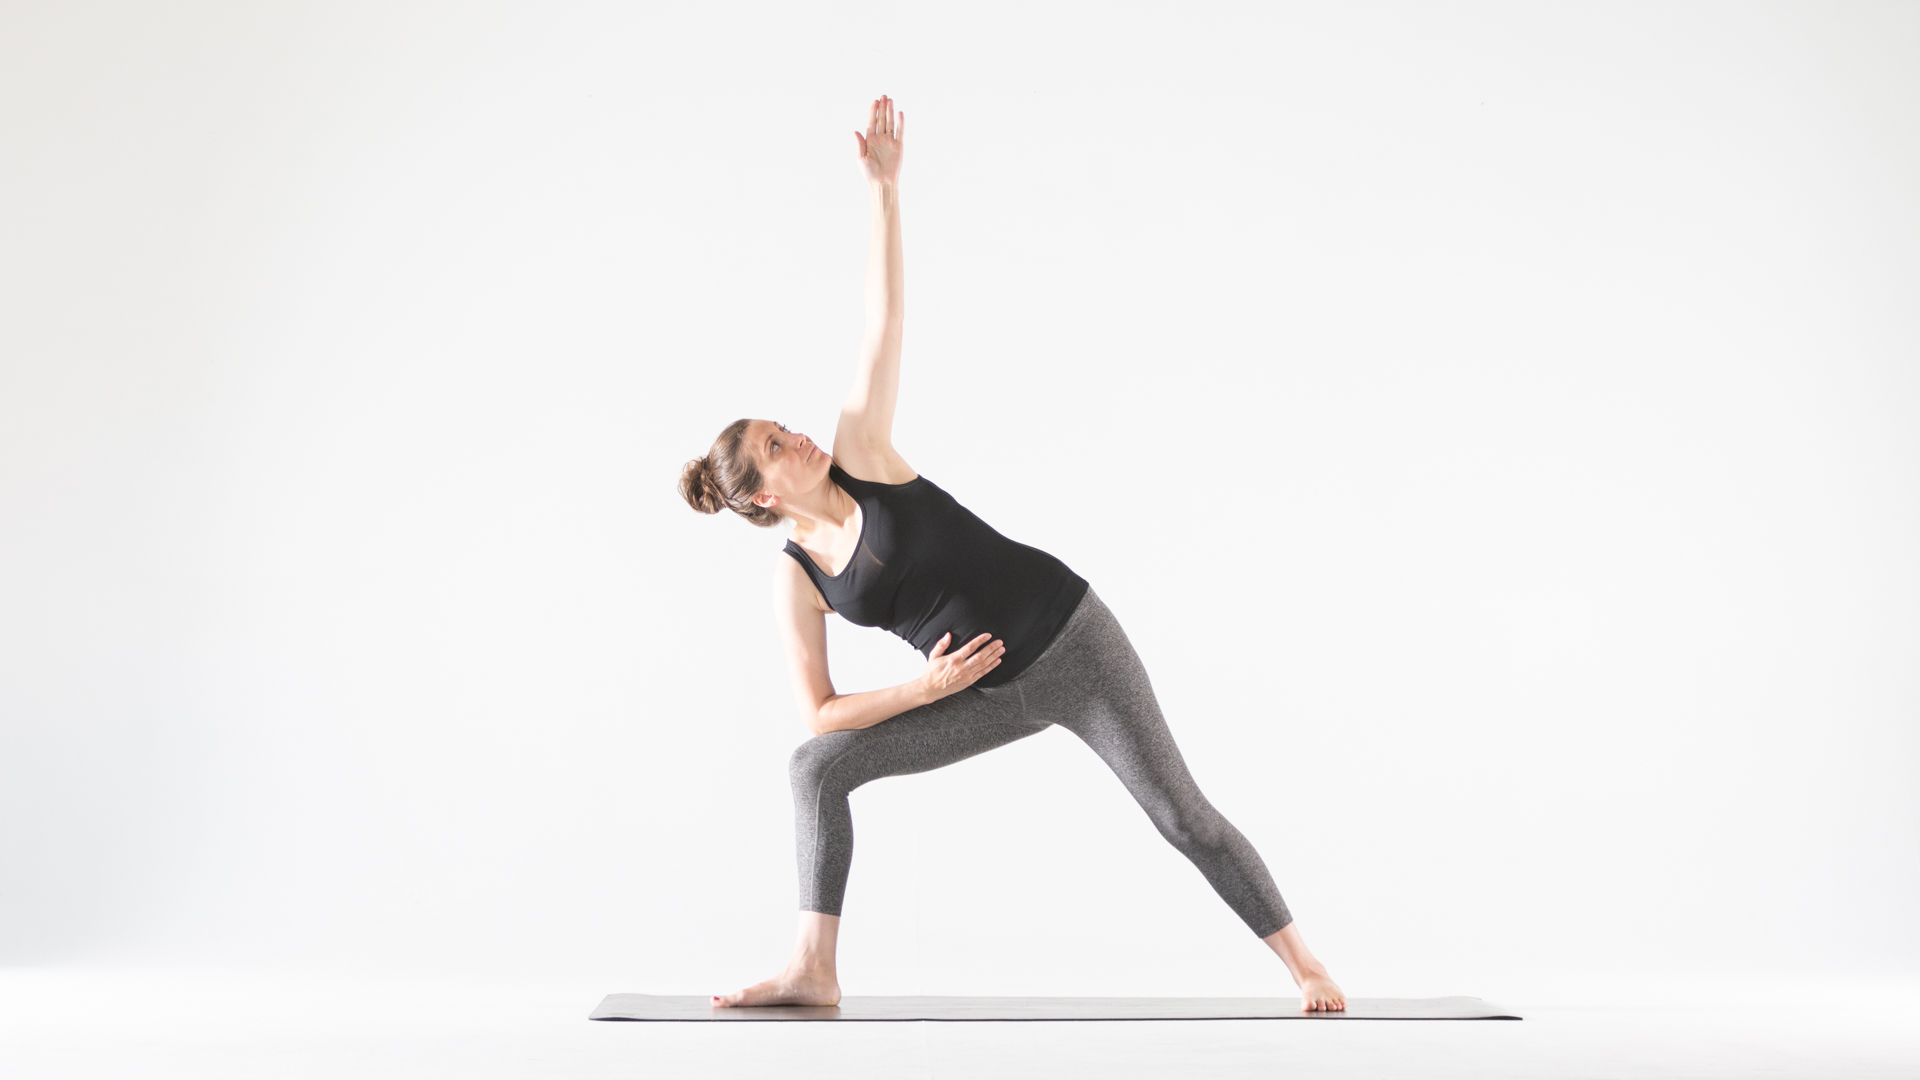 Yoga Poses - Benefits and Steps